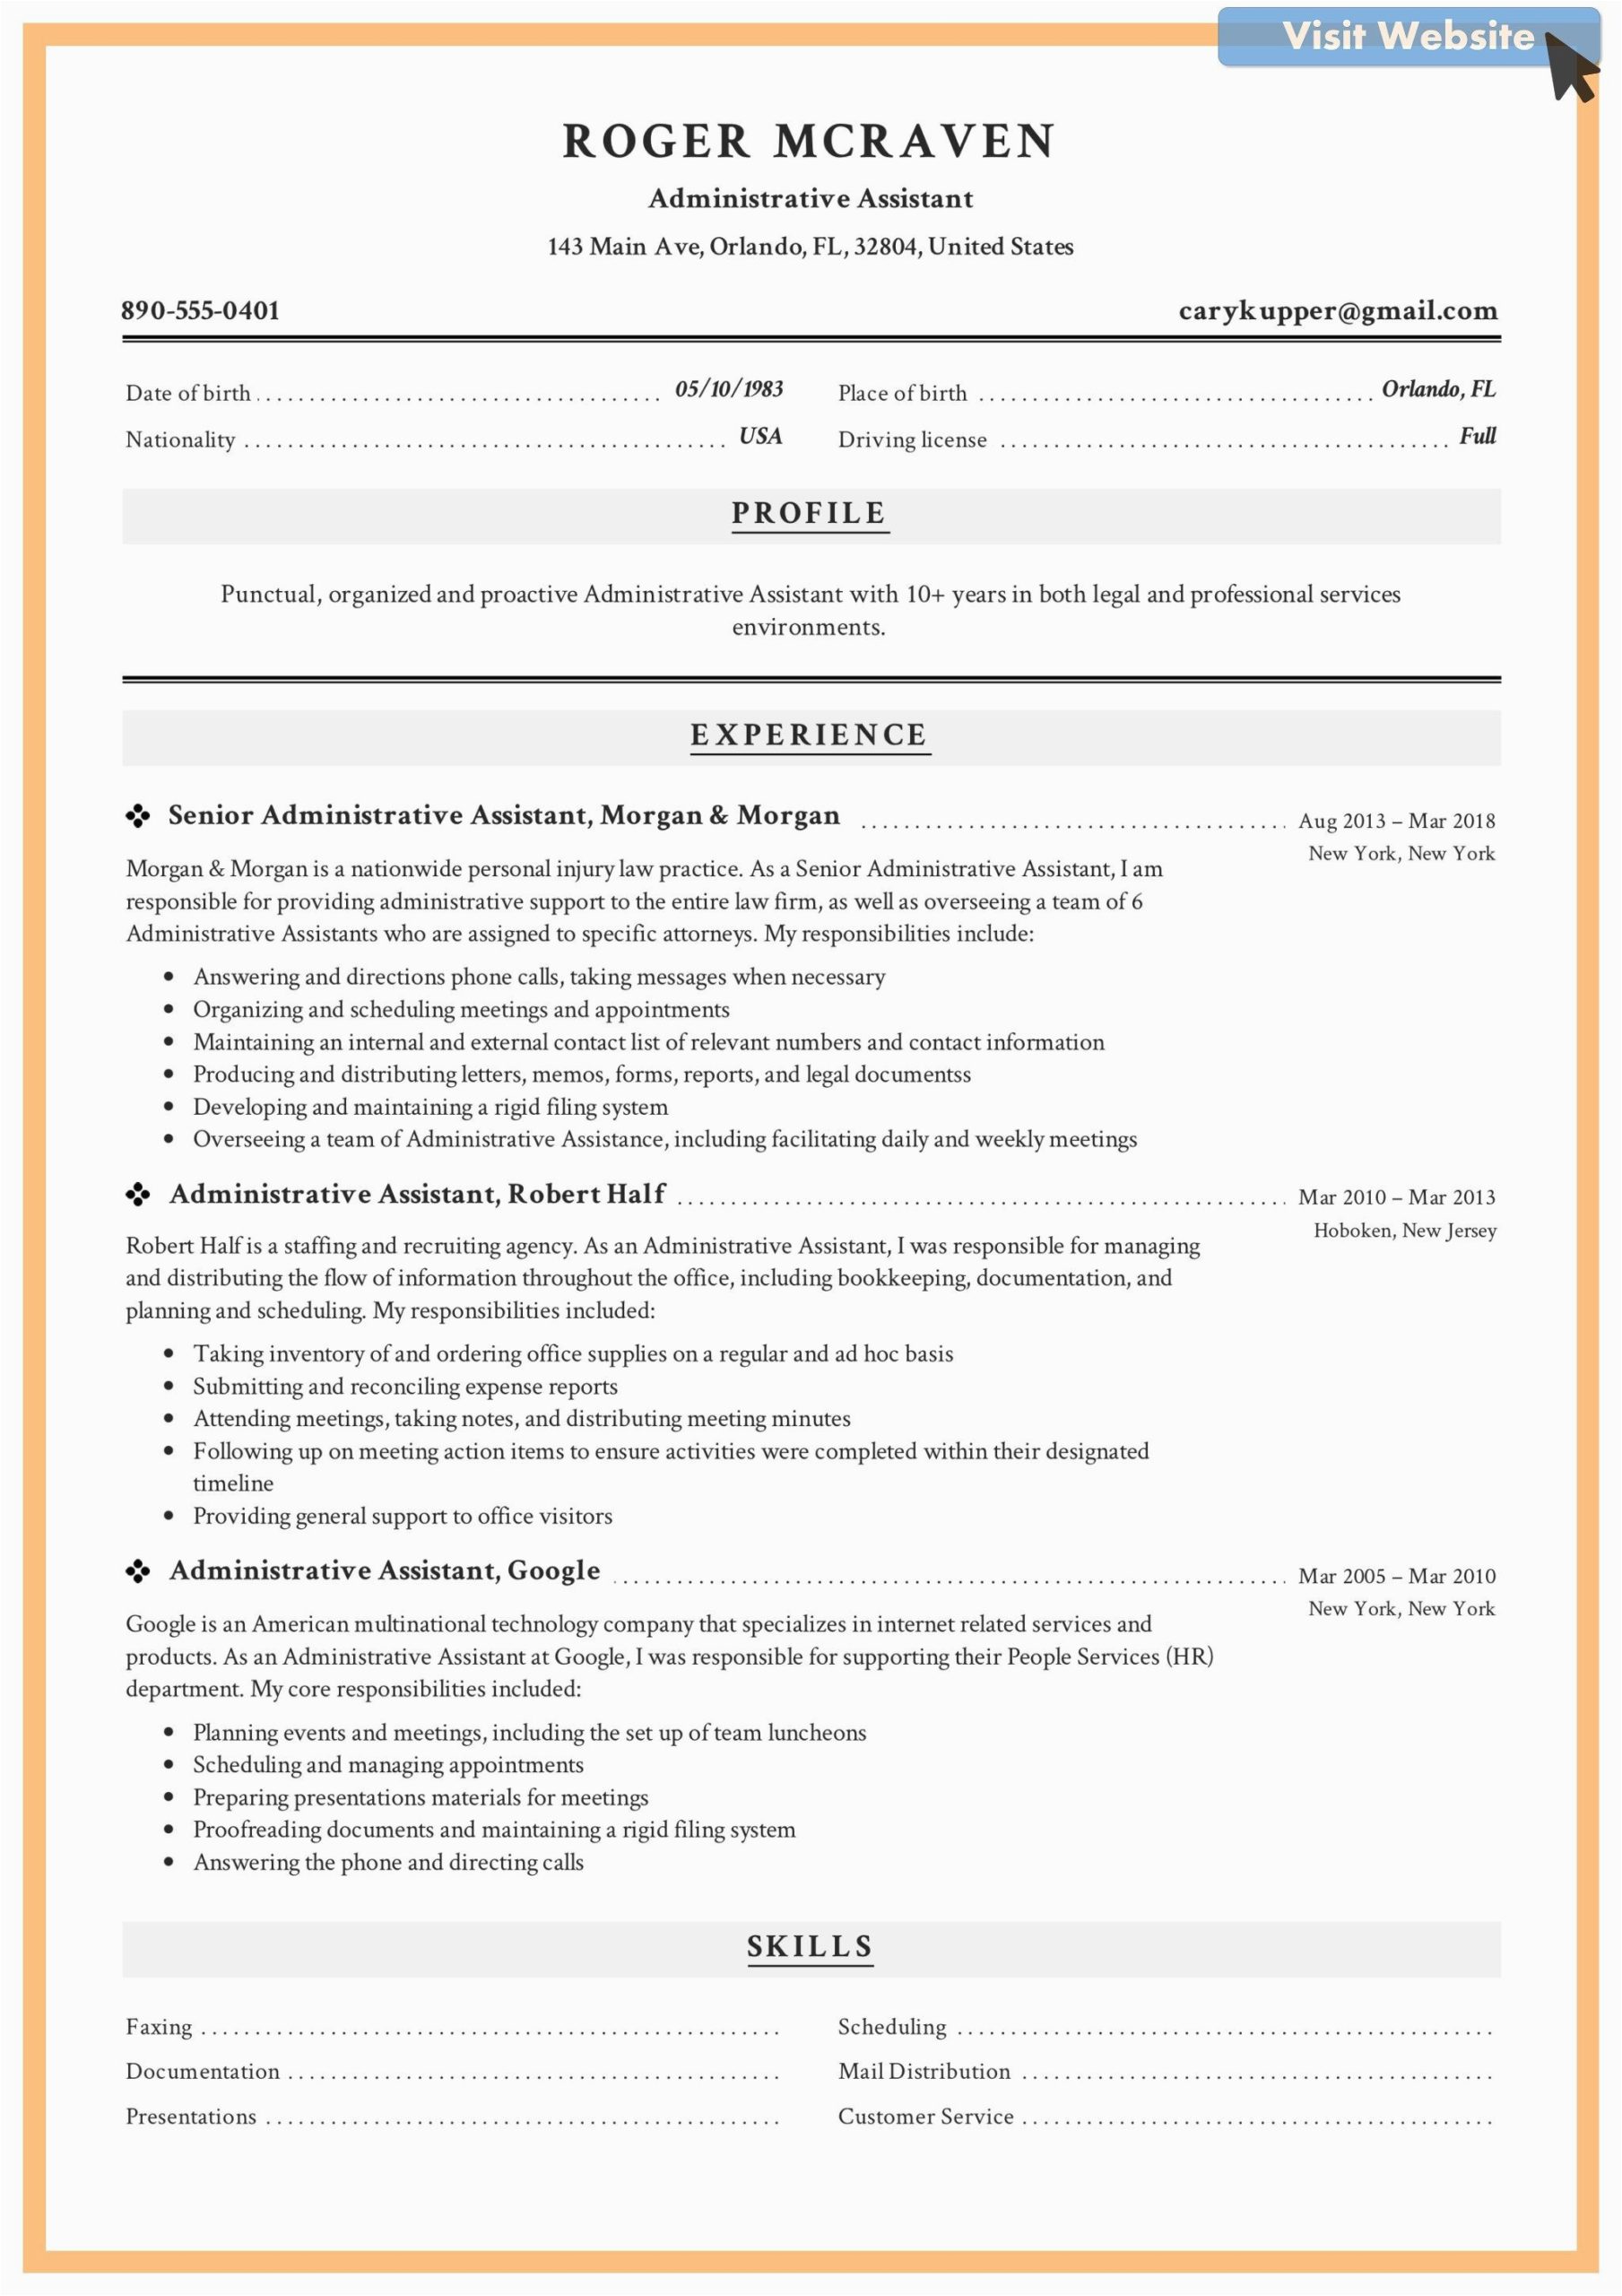 Sample Resume for Administrative assistant Office Manager Fice Administrator Fice Manager Resume Sample 2020